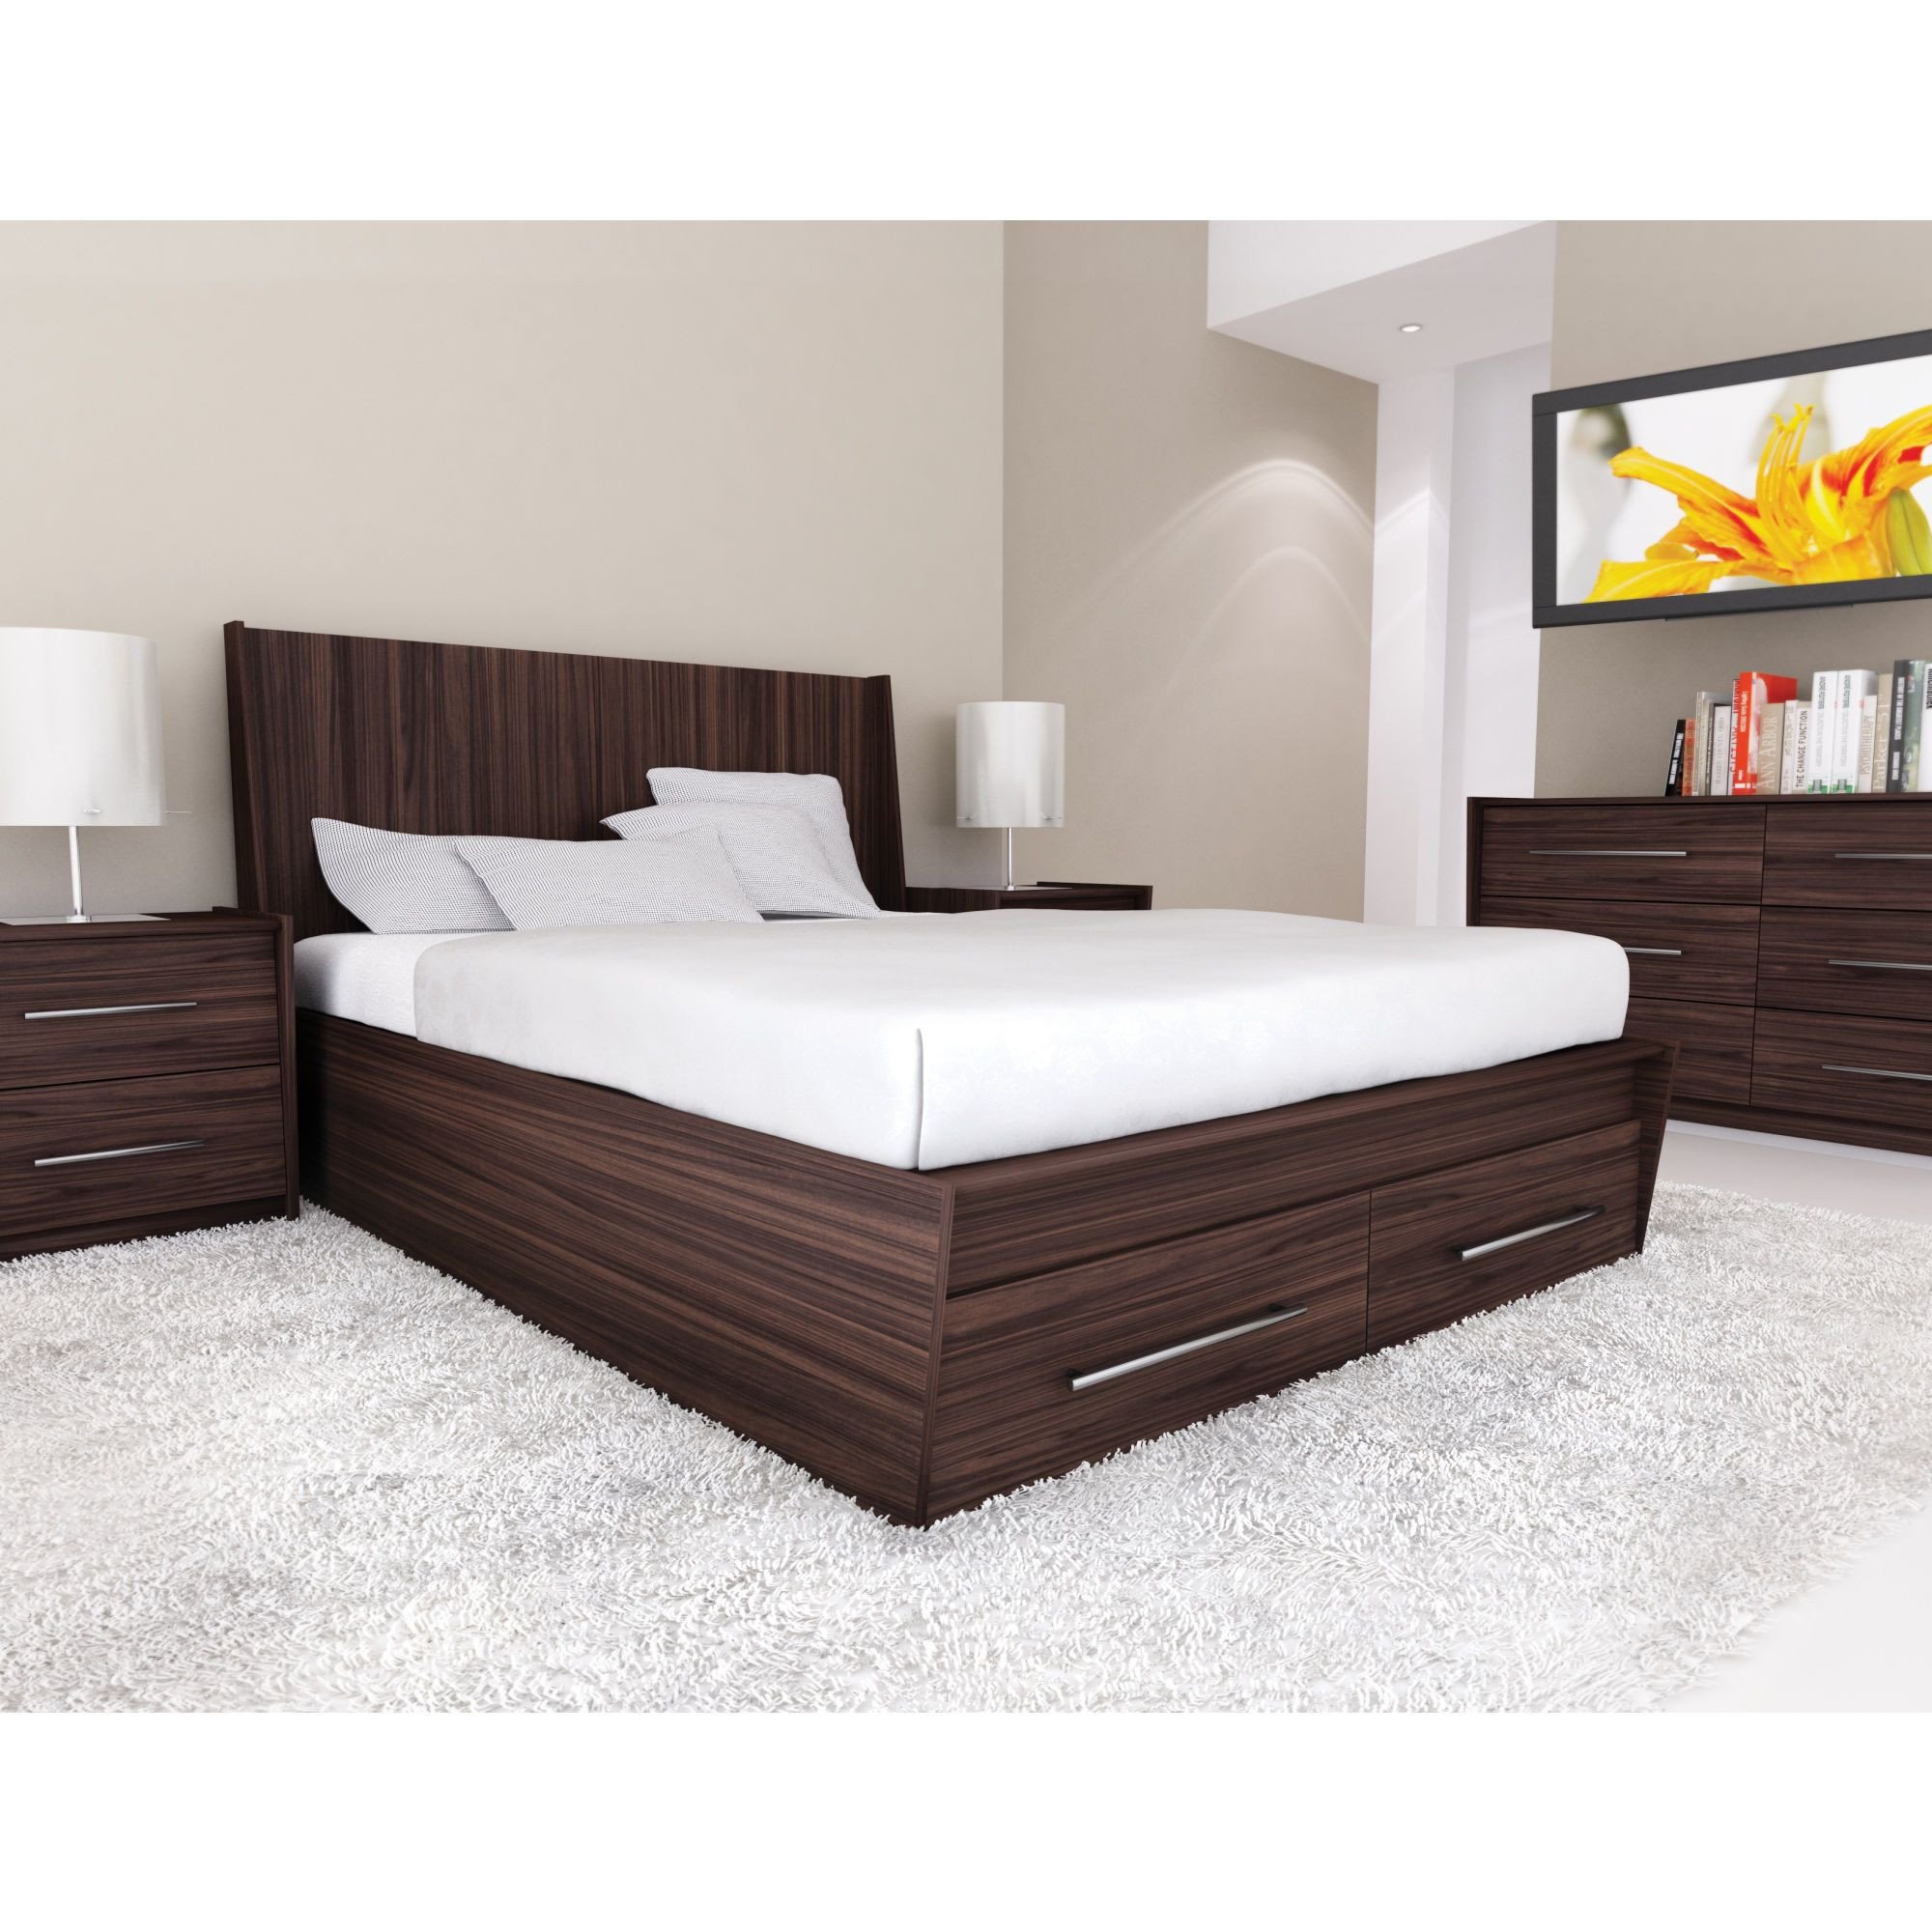 Natural Wood Bedroom Set Best Of Bed Designs for Your fortable Bedroom Interior Design